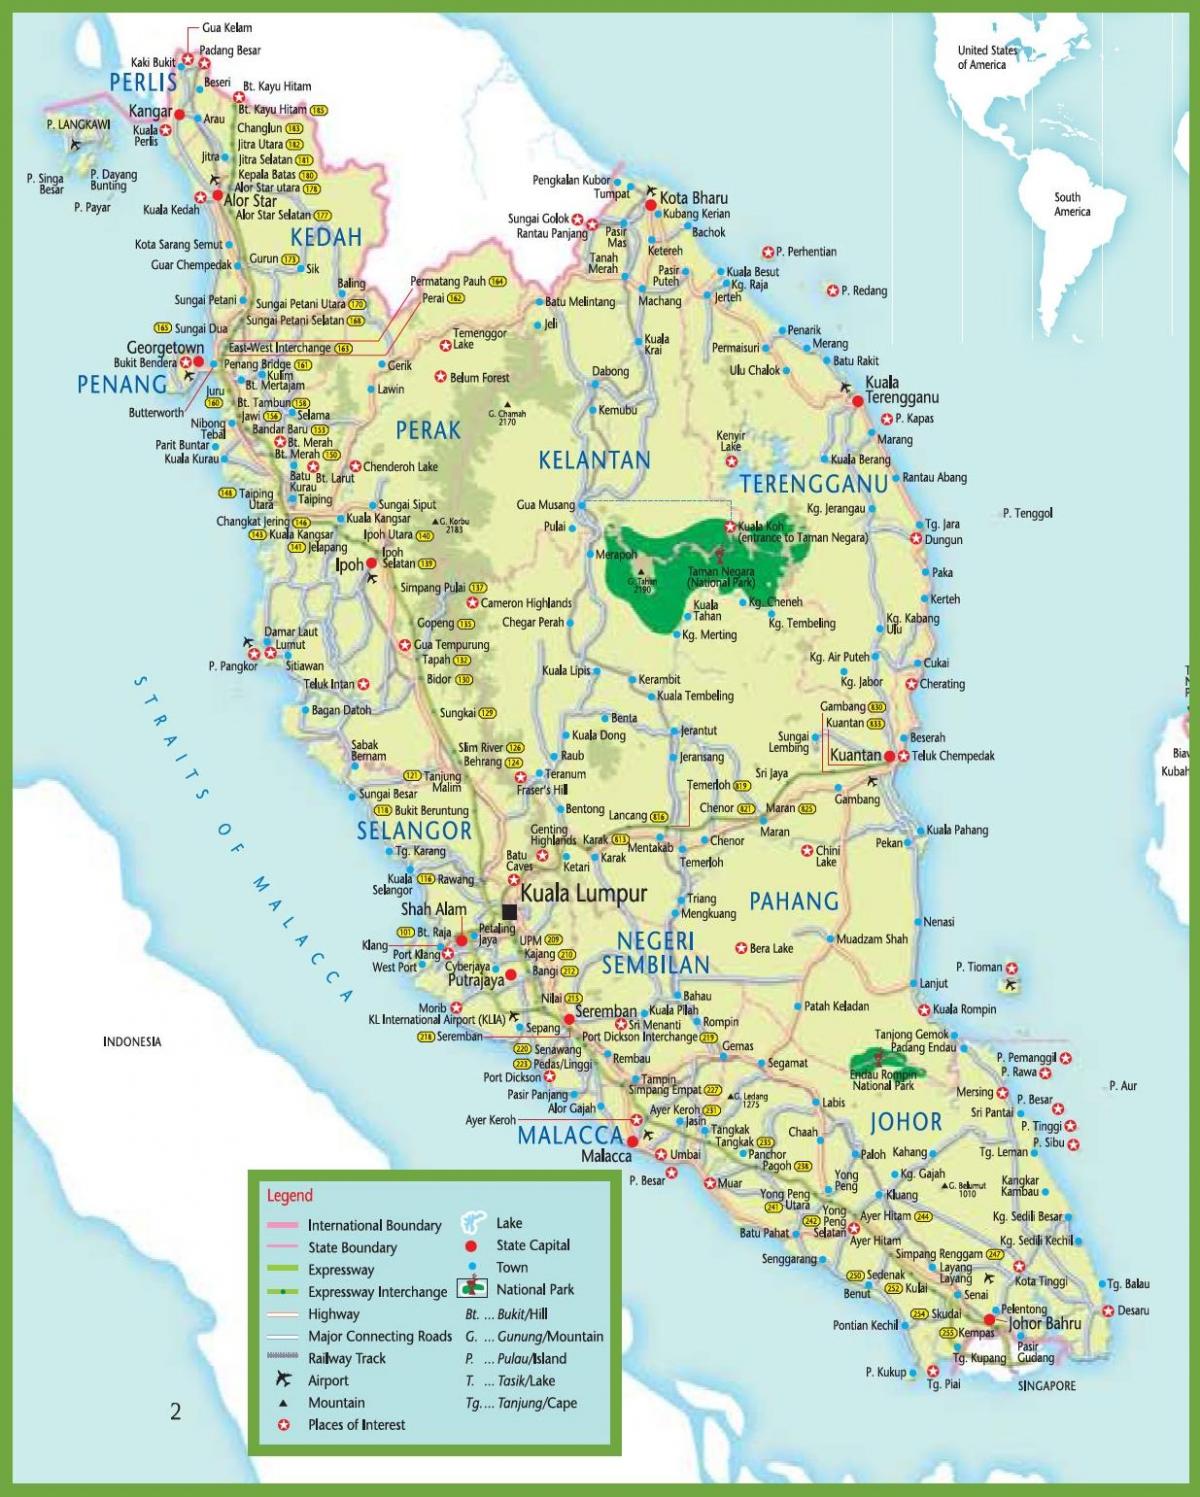 MRI mapa w Malezji